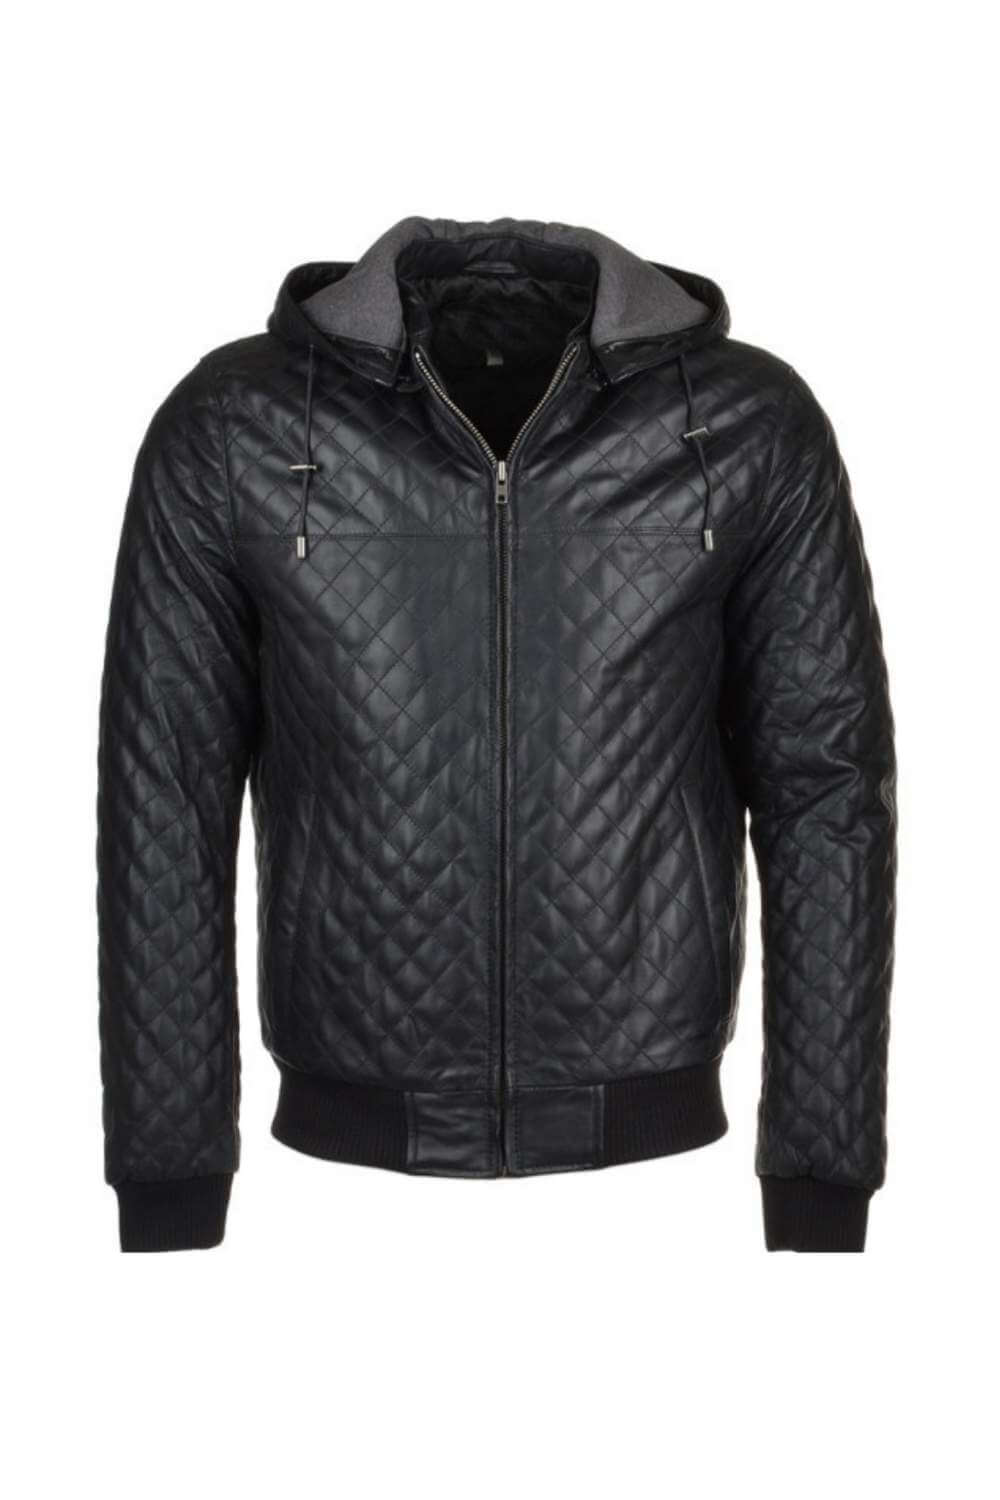 Kito Black Puffer Bomber Leather Jacket | Throblife